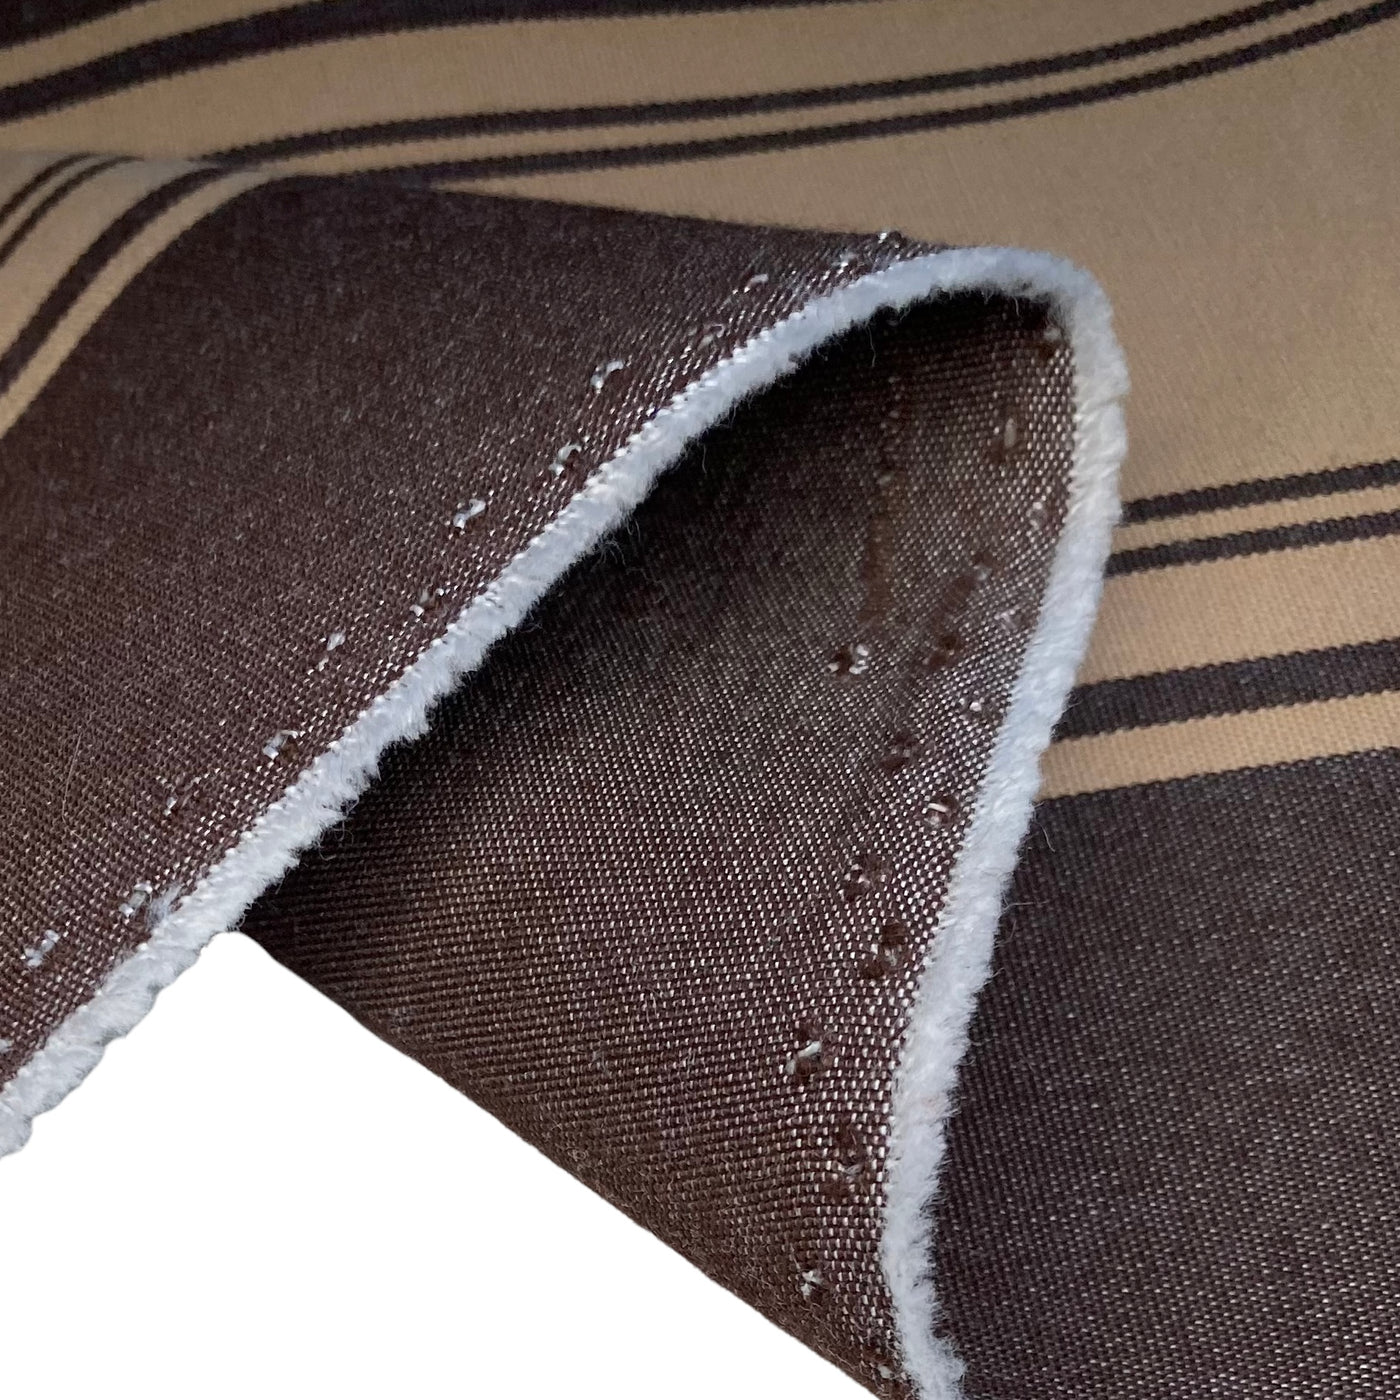 Sunbrella Striped Woven Upholstery - 48” - Brown/Beige